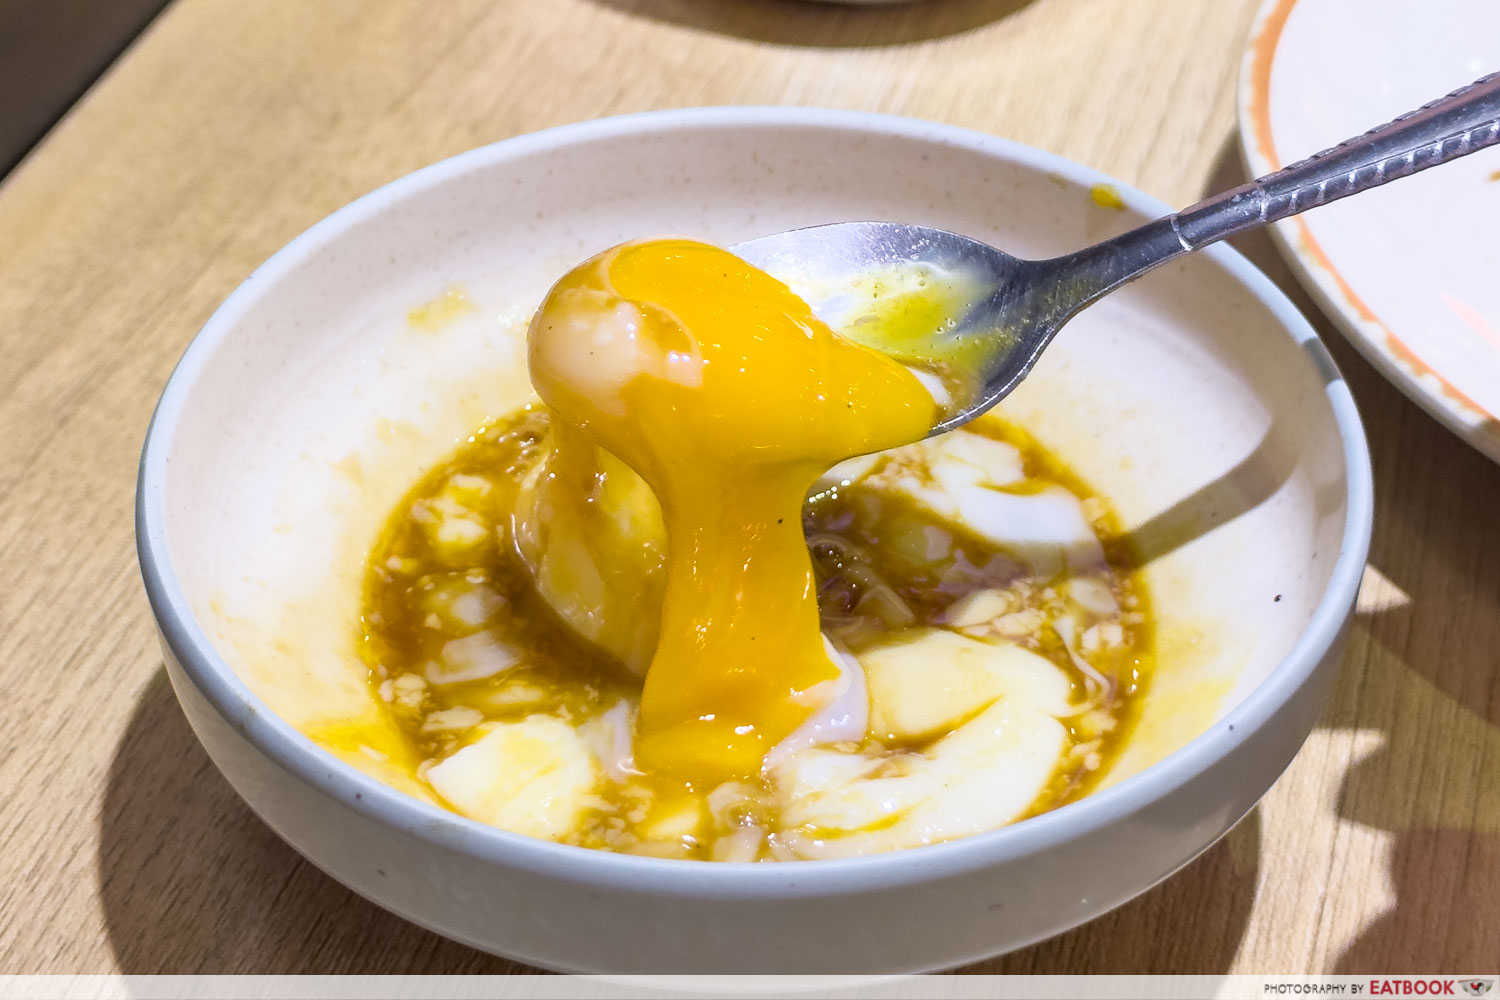 heavenly wang - egg yolk